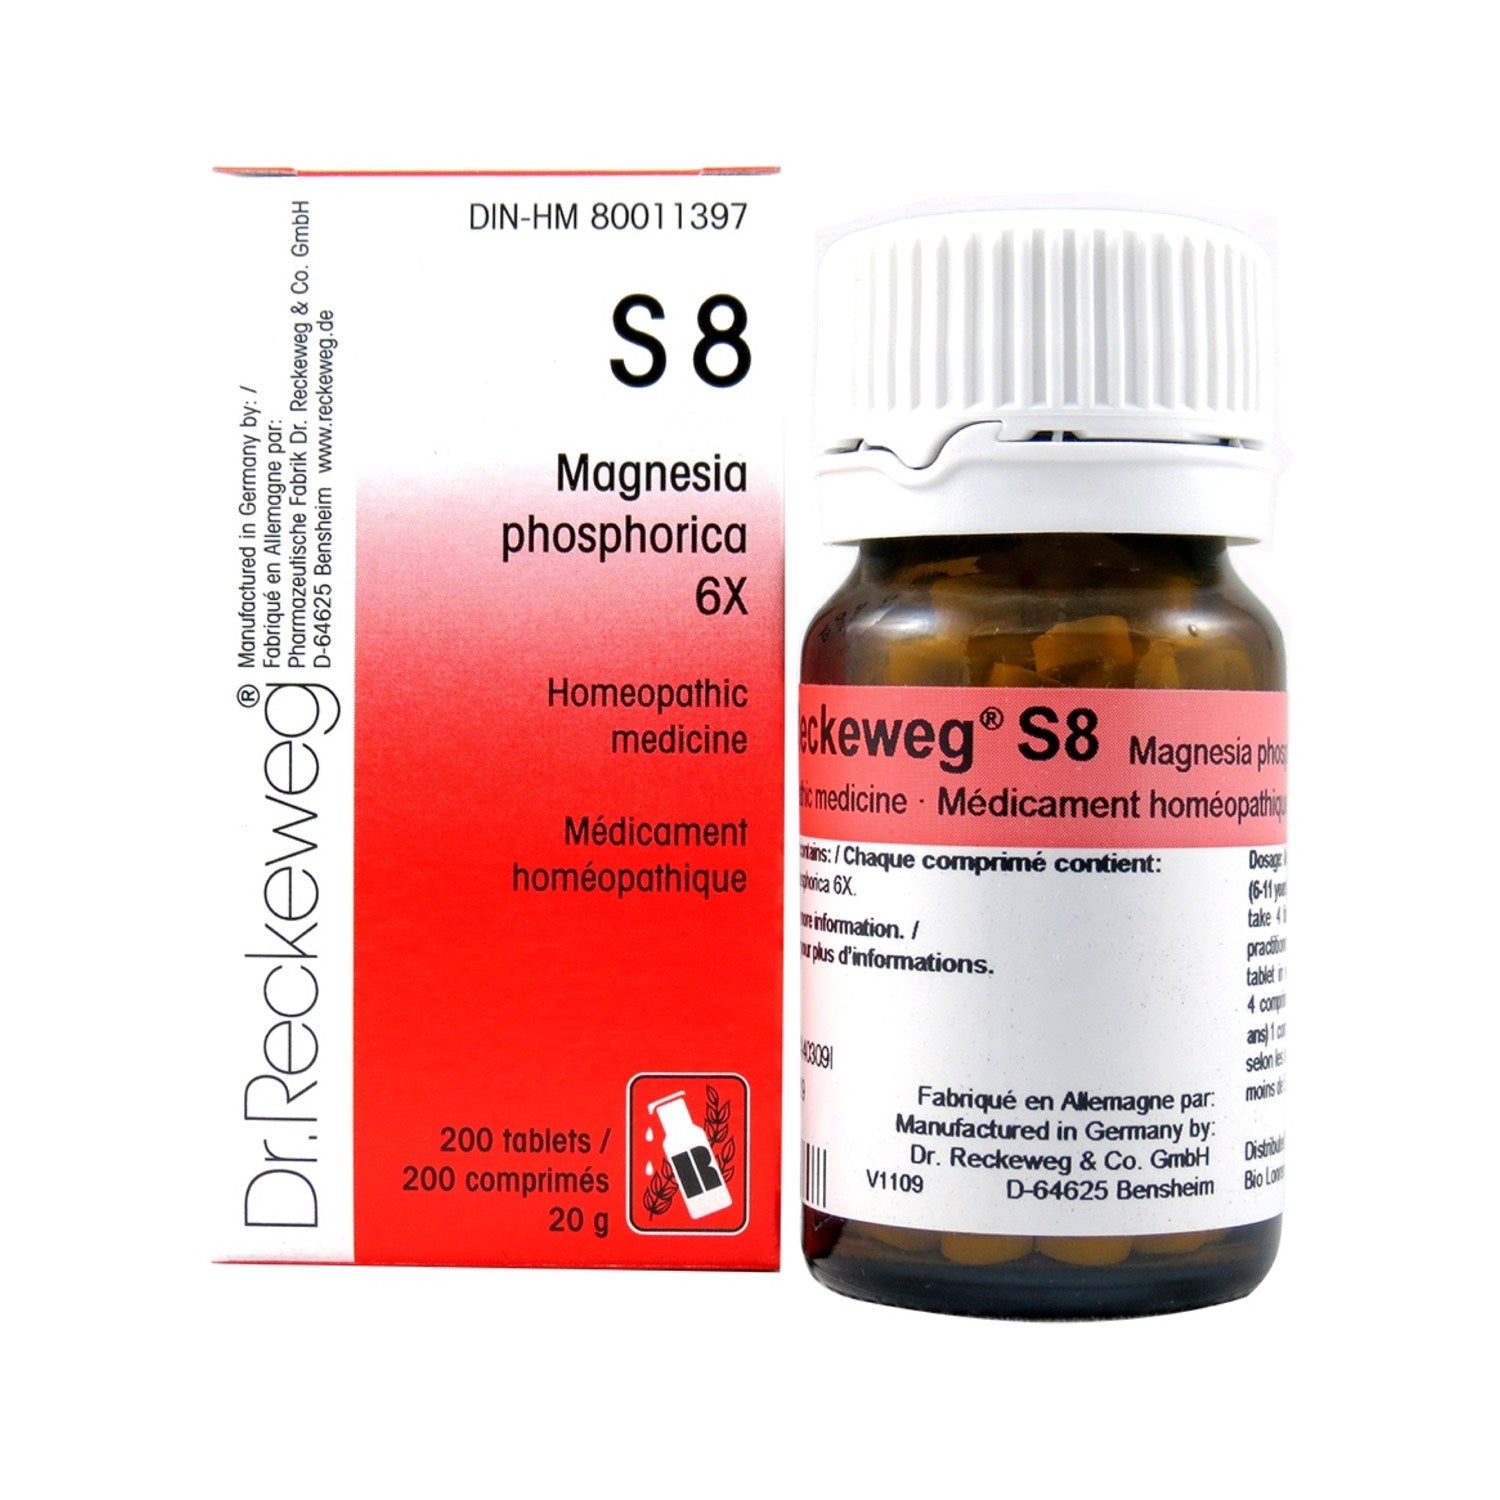 S8 Magnesia phosphorica Homeopathic medicine Schuessler salt 6X and 200 tablets (20 g) - iwellnessbox